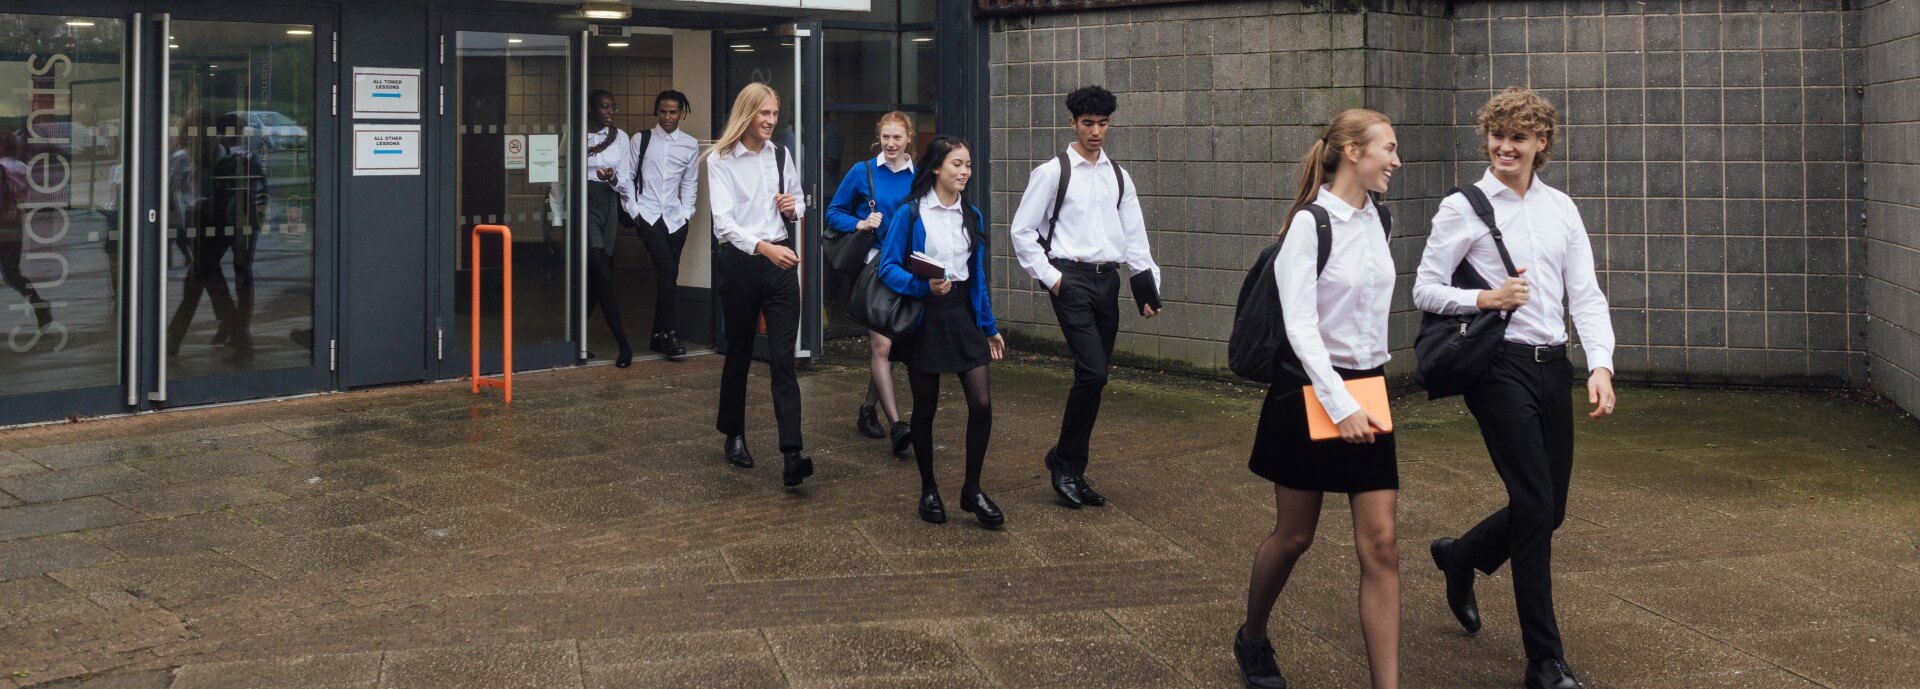 School pupils walk out of a school building